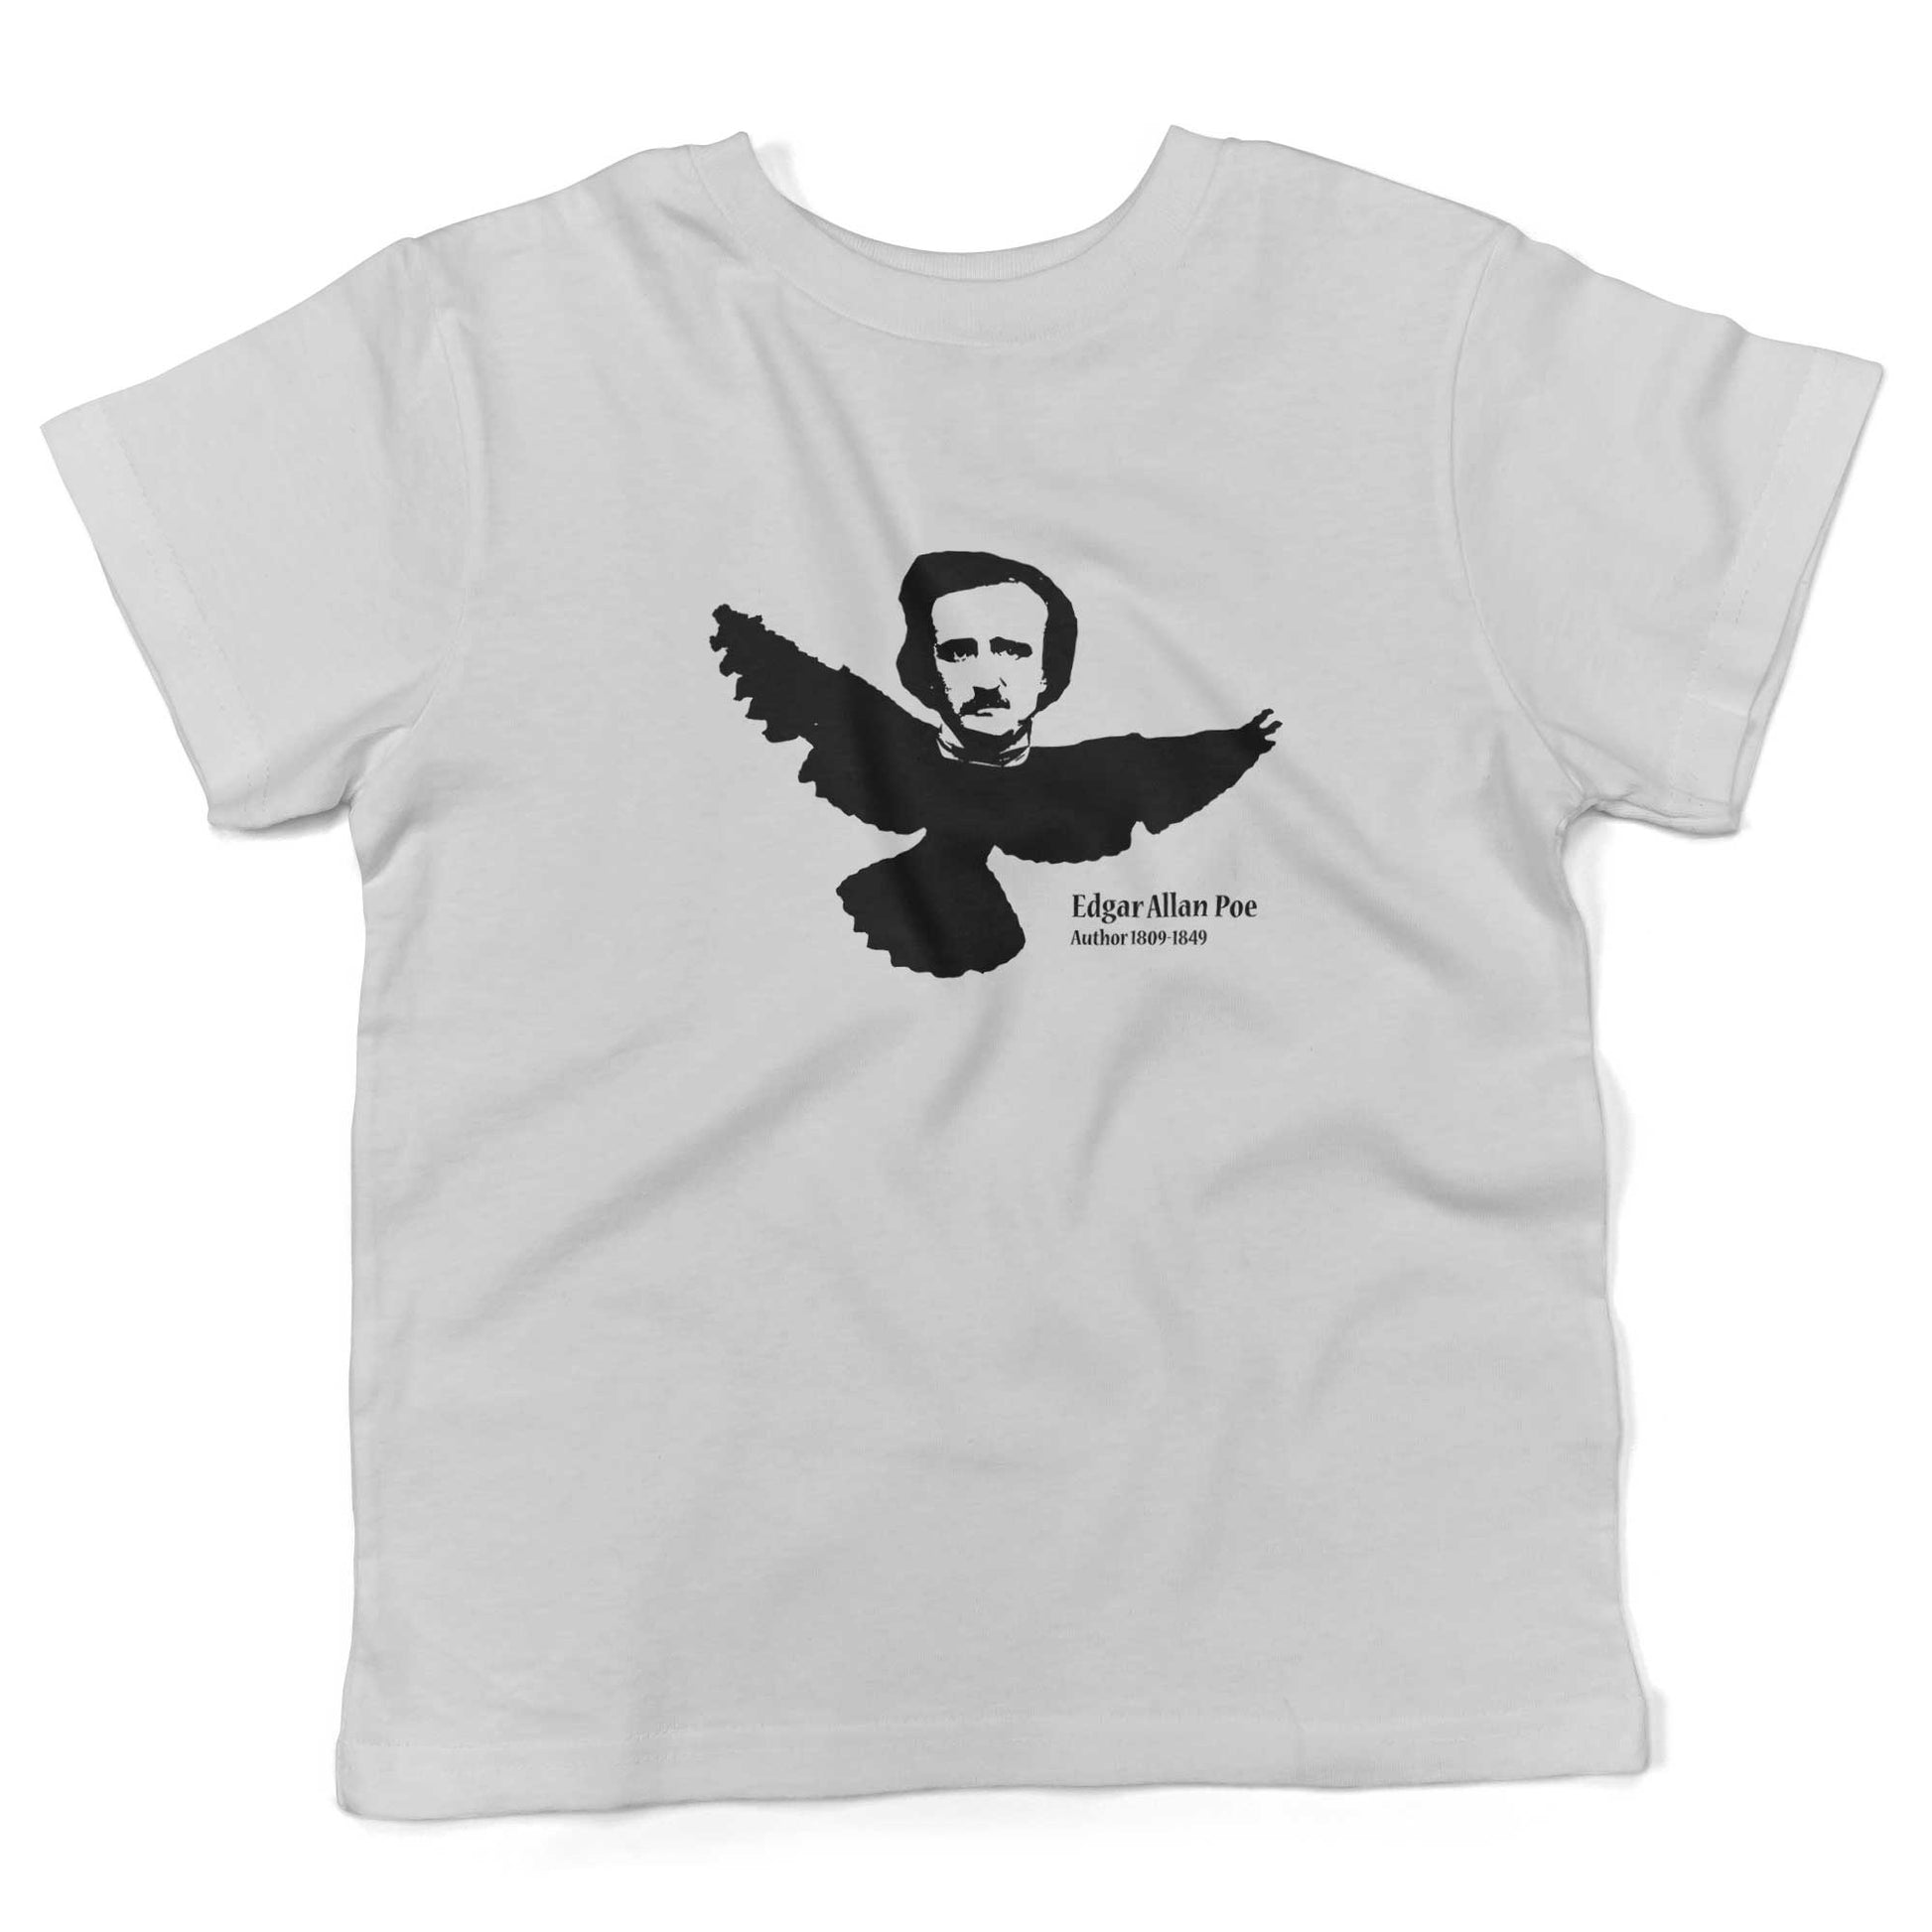 Edgar Allan Poe Toddler Shirt-White-2T